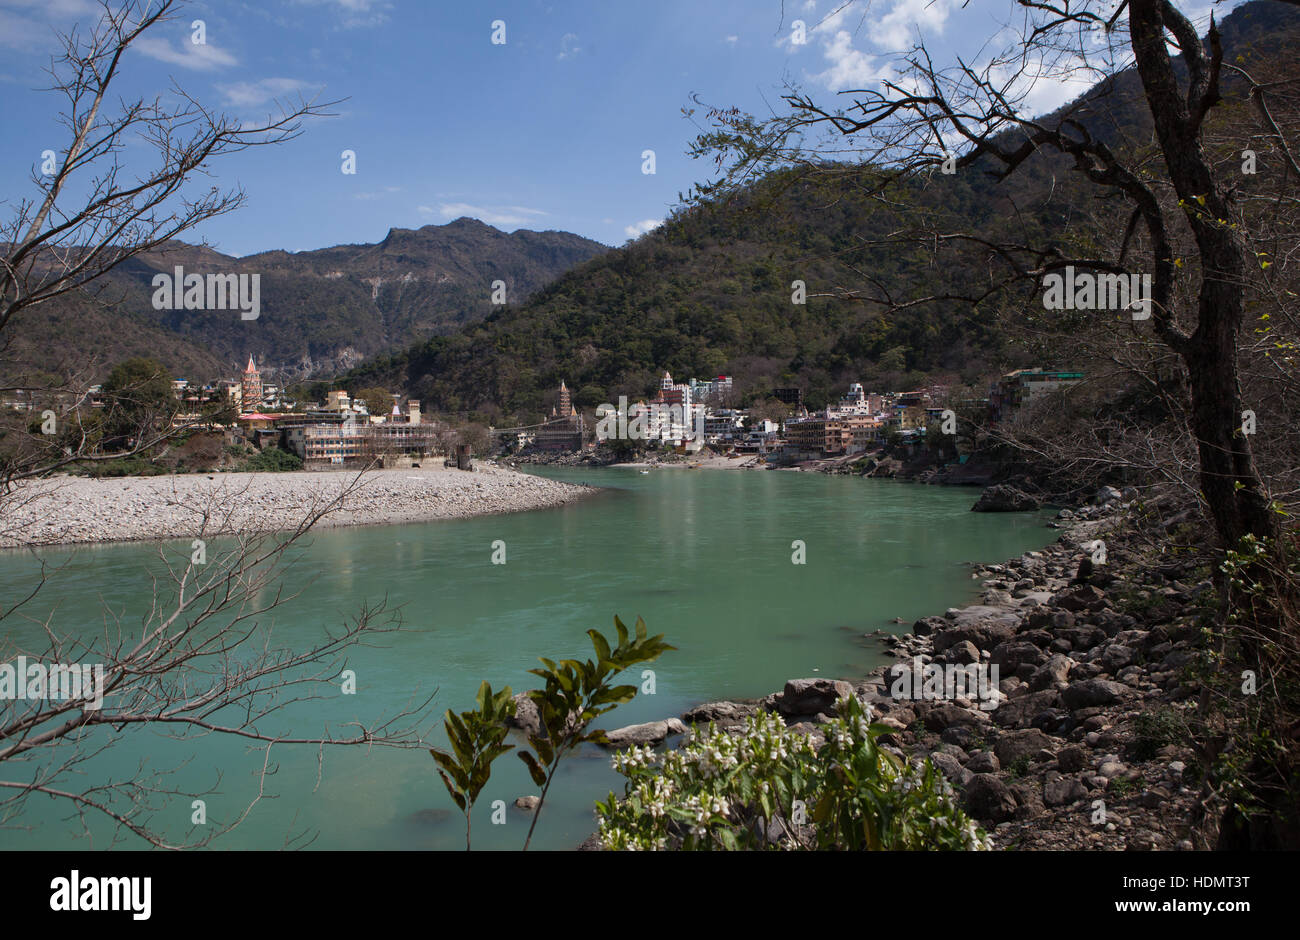 Holy Ganges Or Ganga River Flowing Through Himalayan Mountians Of Rishikesh Uttarakhand India Stock Photo - Download Image Now - iStock